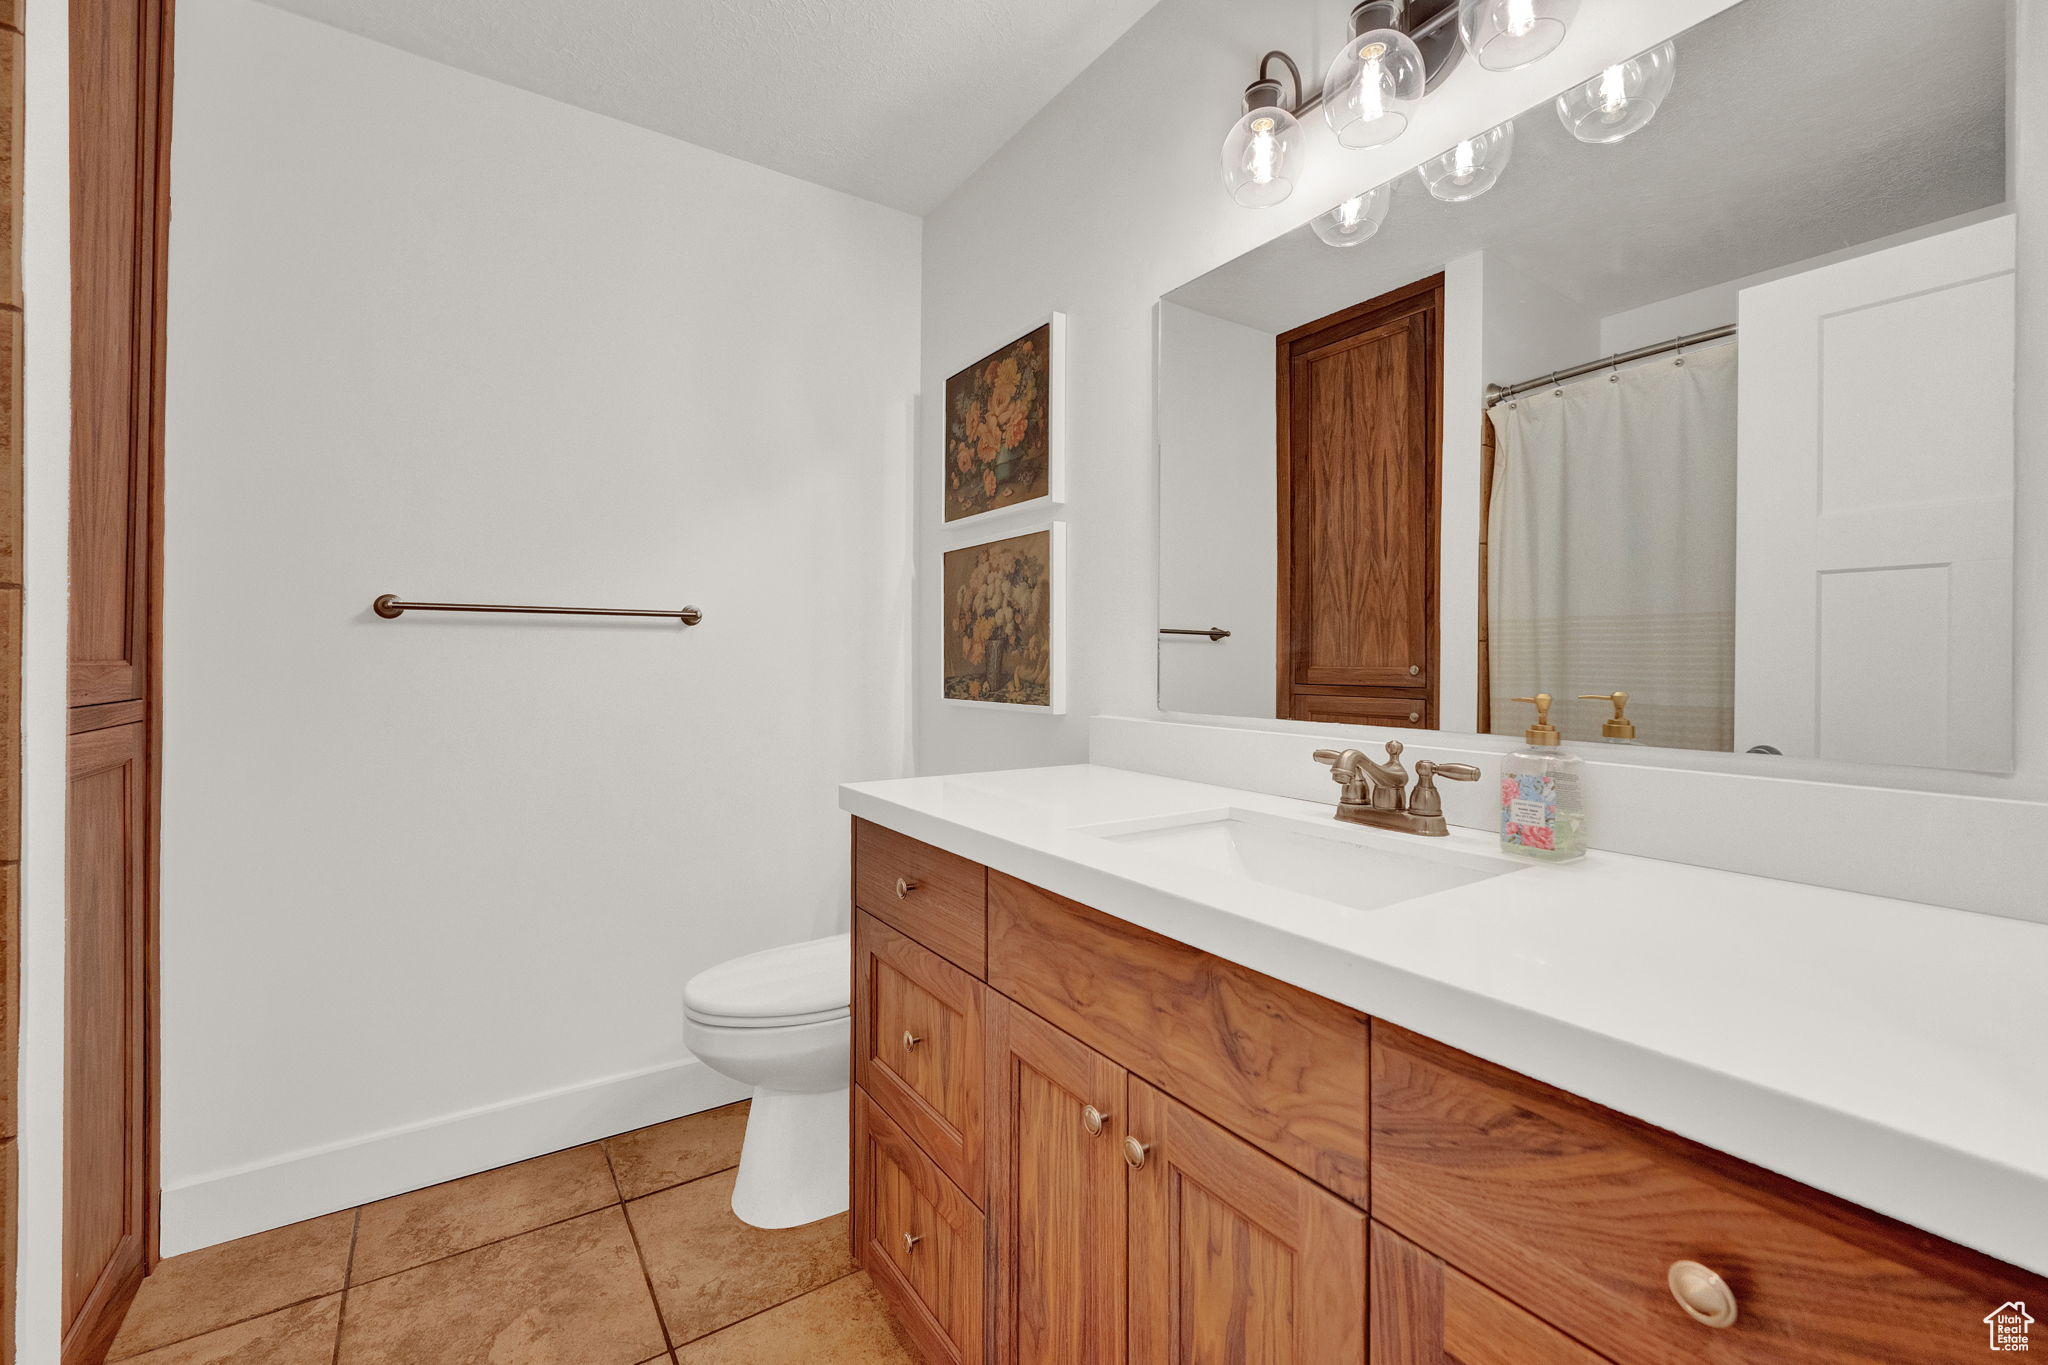 Bathroom with oversized vanity, tile floors, and toilet